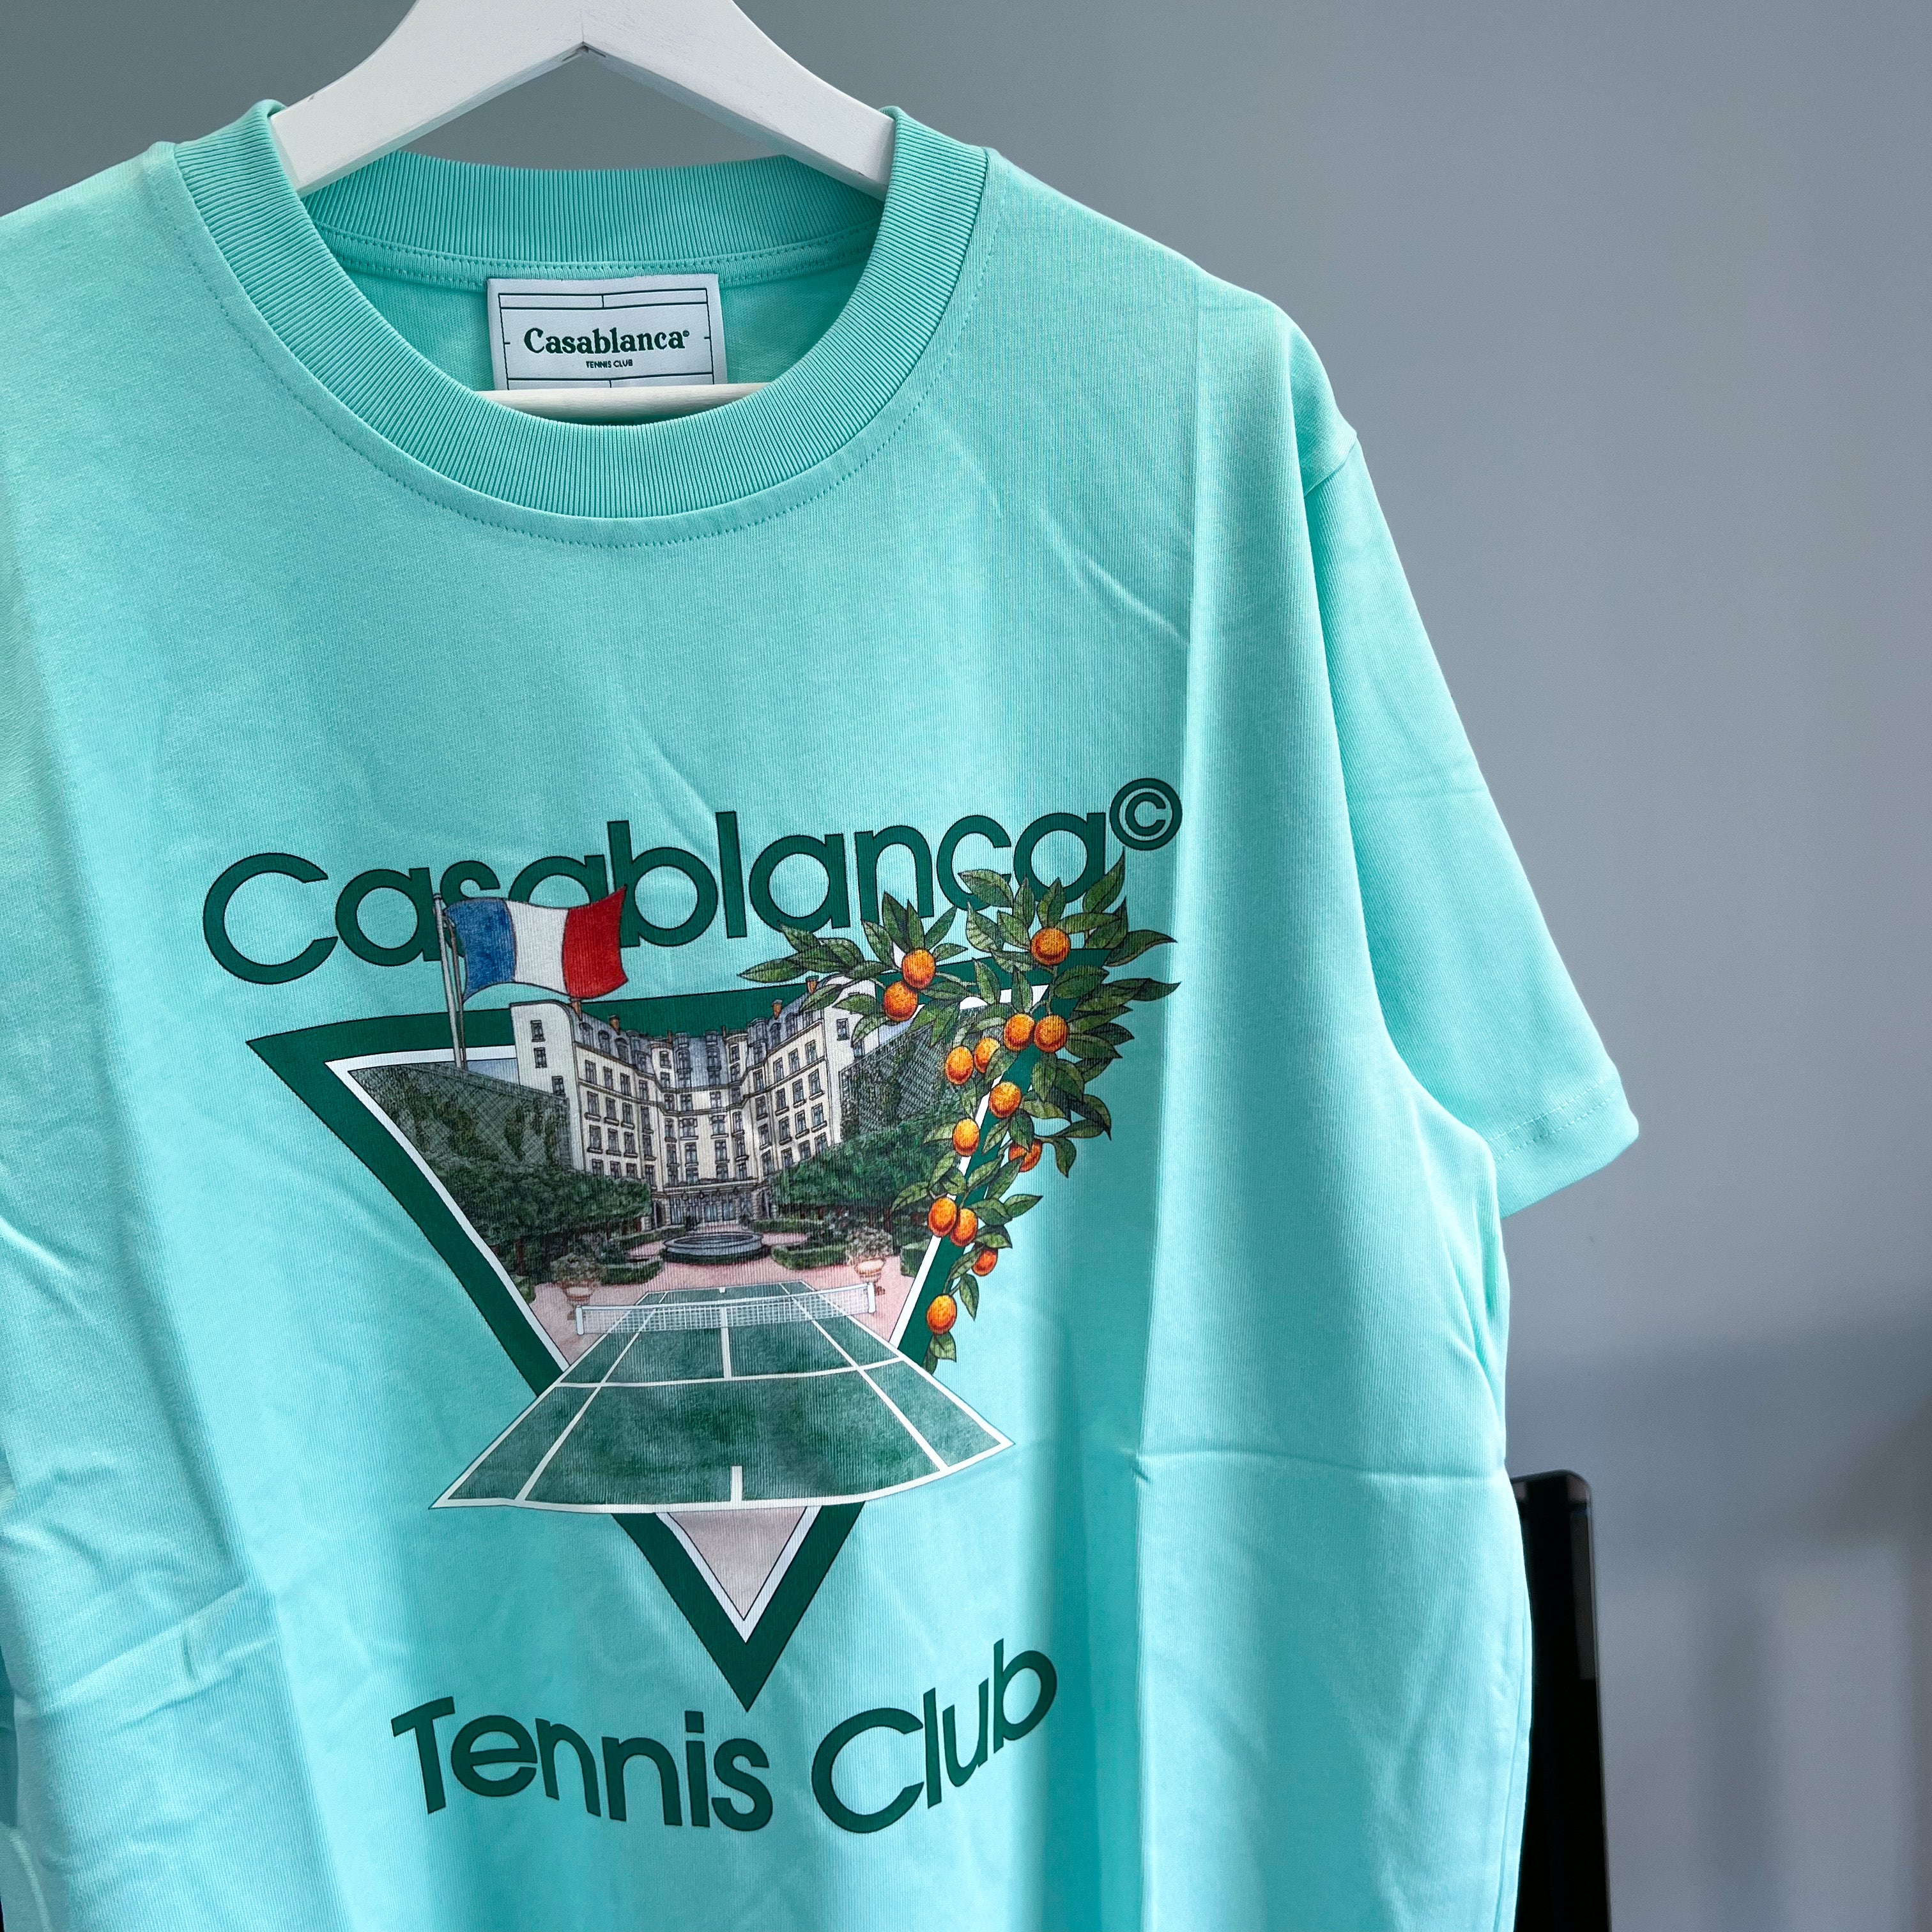 Casablanca Tennis Club Tee - Mint Green